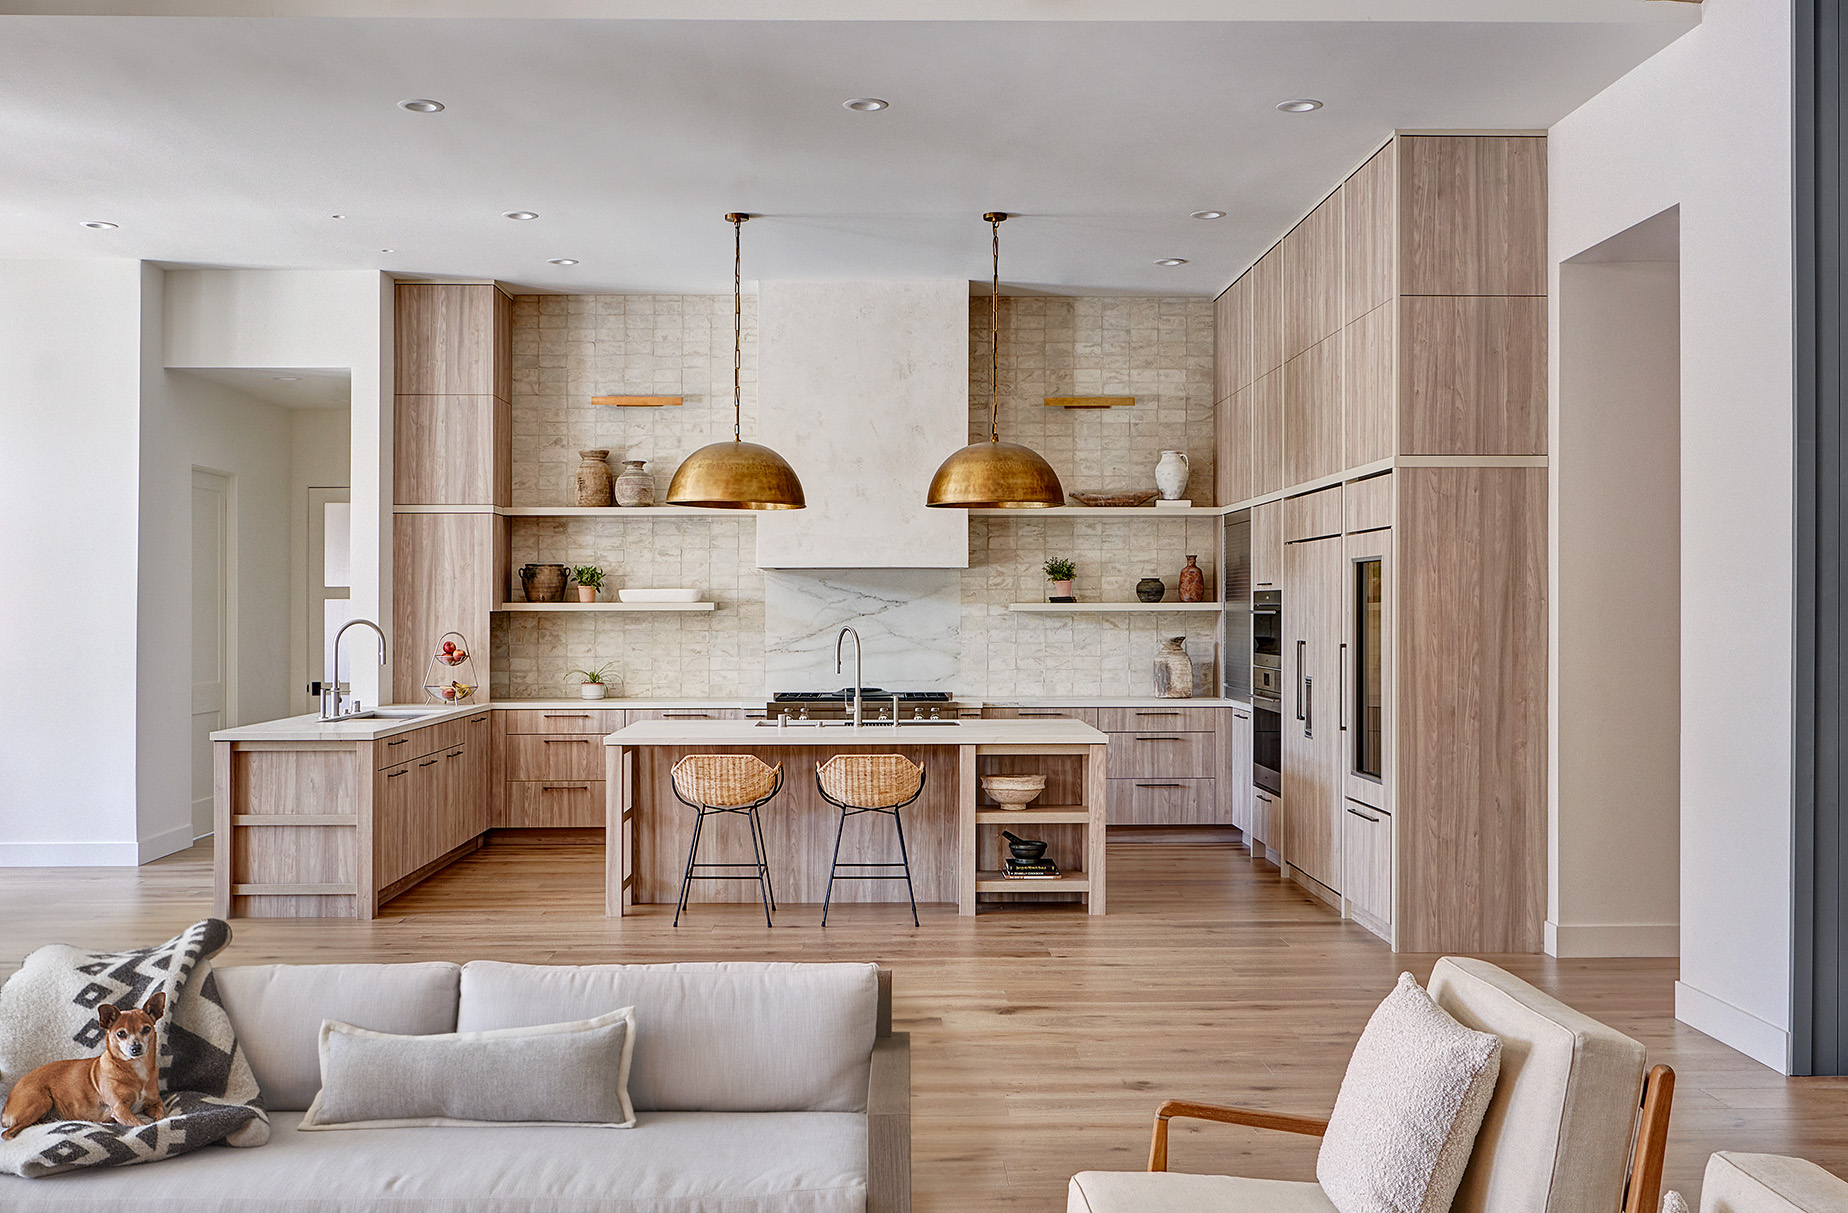 Best Residential Kitchen Design Over 150 sq ft -02